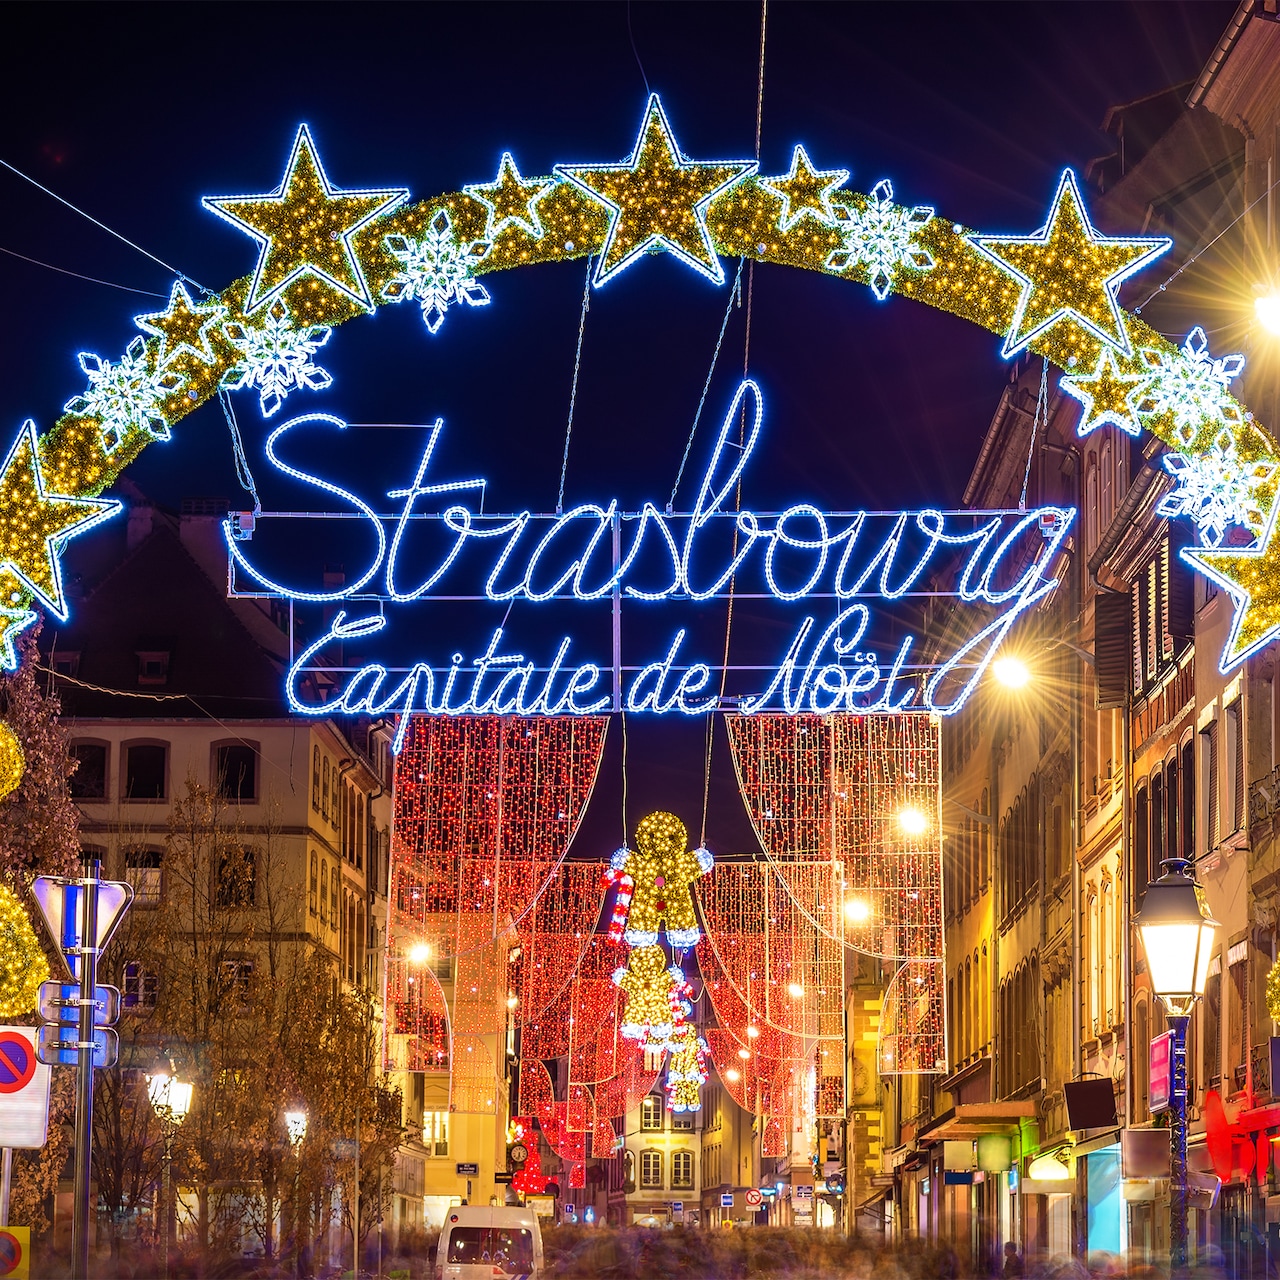 A lit-up sign between two buildings says Strasbourg Capitale de Noel